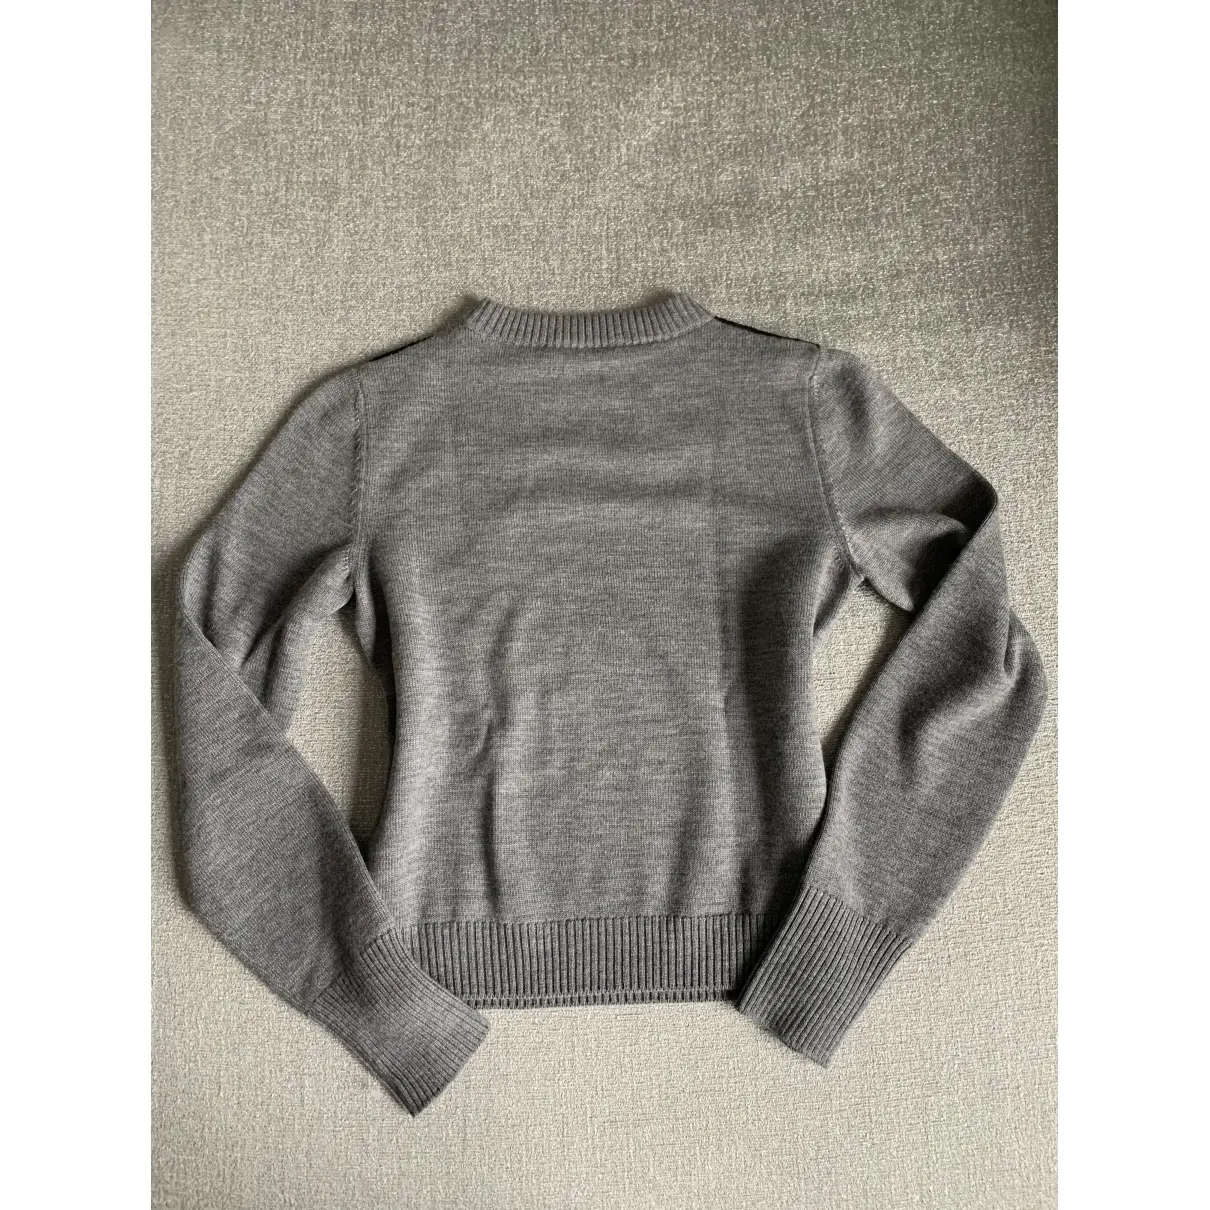 Philosophy Di Lorenzo Serafini Wool jumper for sale